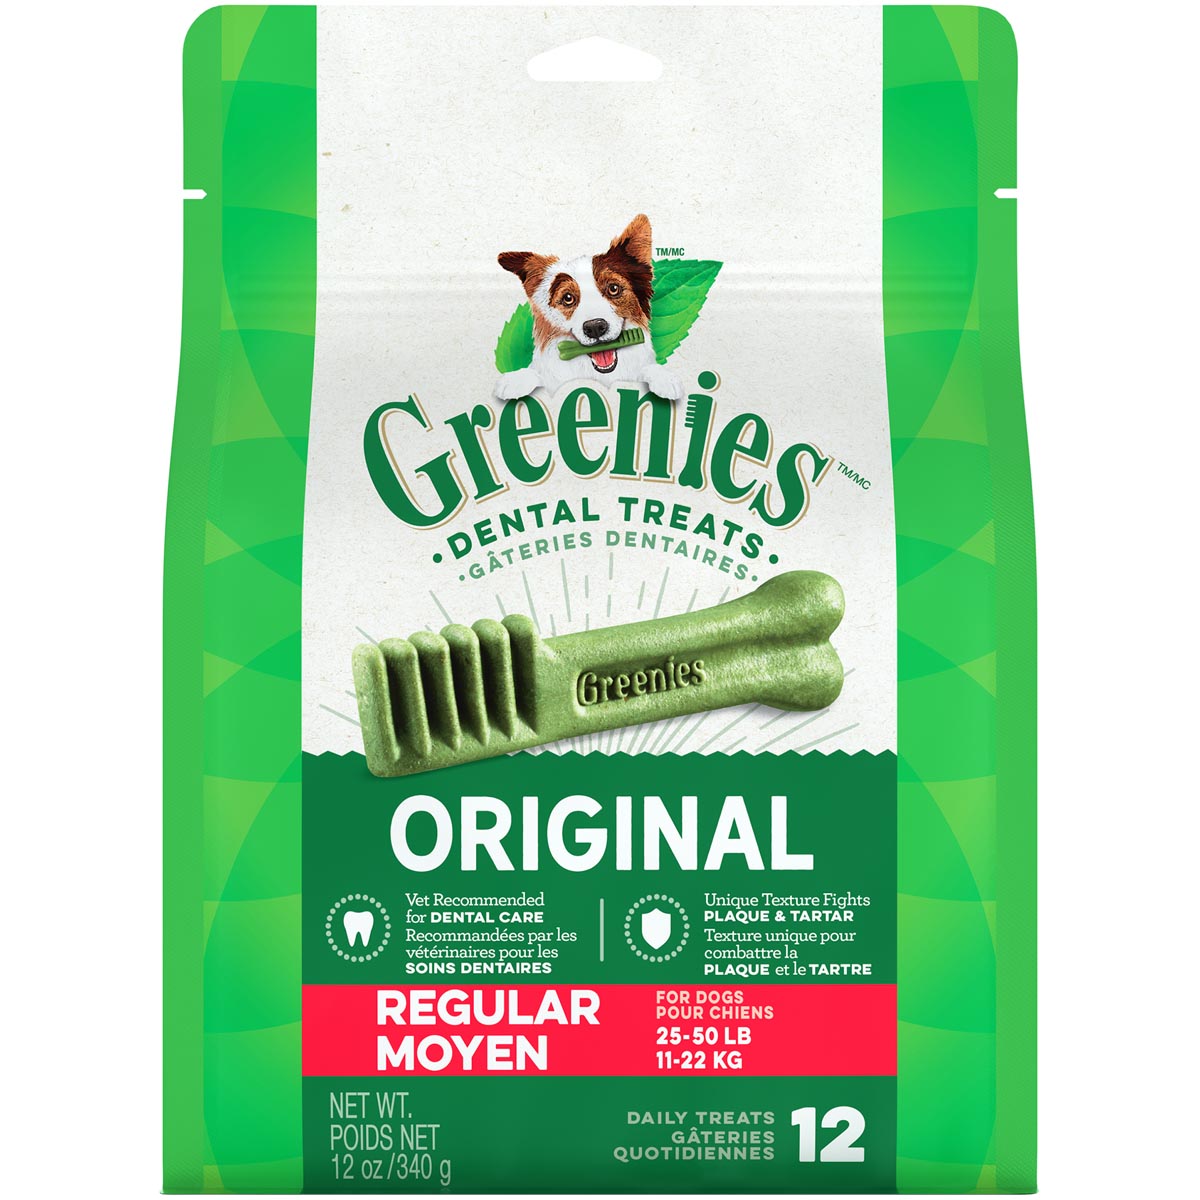 Greenies Dental Treats Original Regular Dog Treats 12 oz. Bag